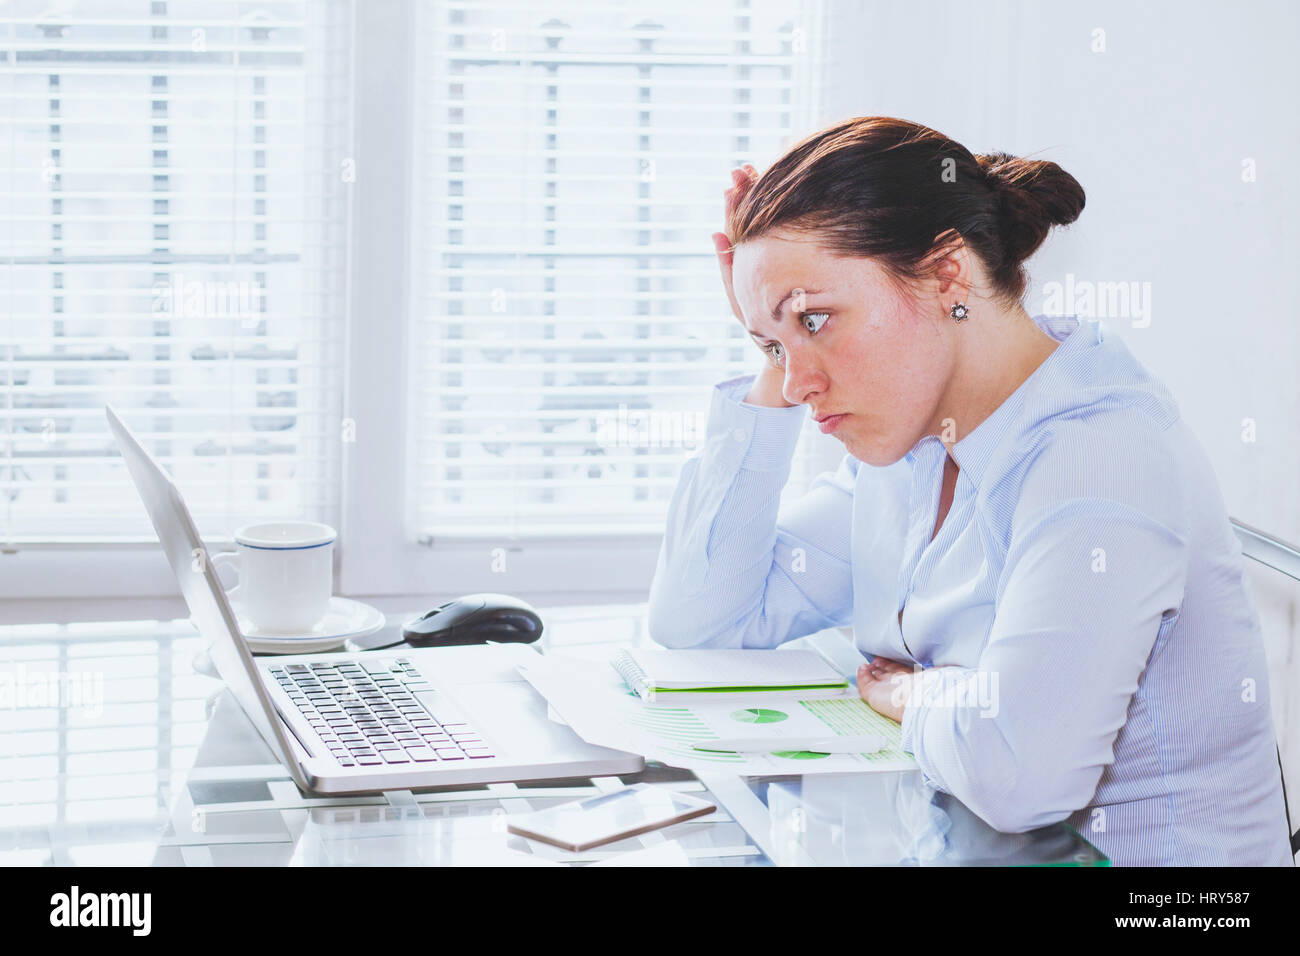 Böse wütende Frau in modernen Geschäftsstelle Blick auf Bildschirm des Laptop-Computer, Ärger, verärgert Geschäftsfrau Stockfoto